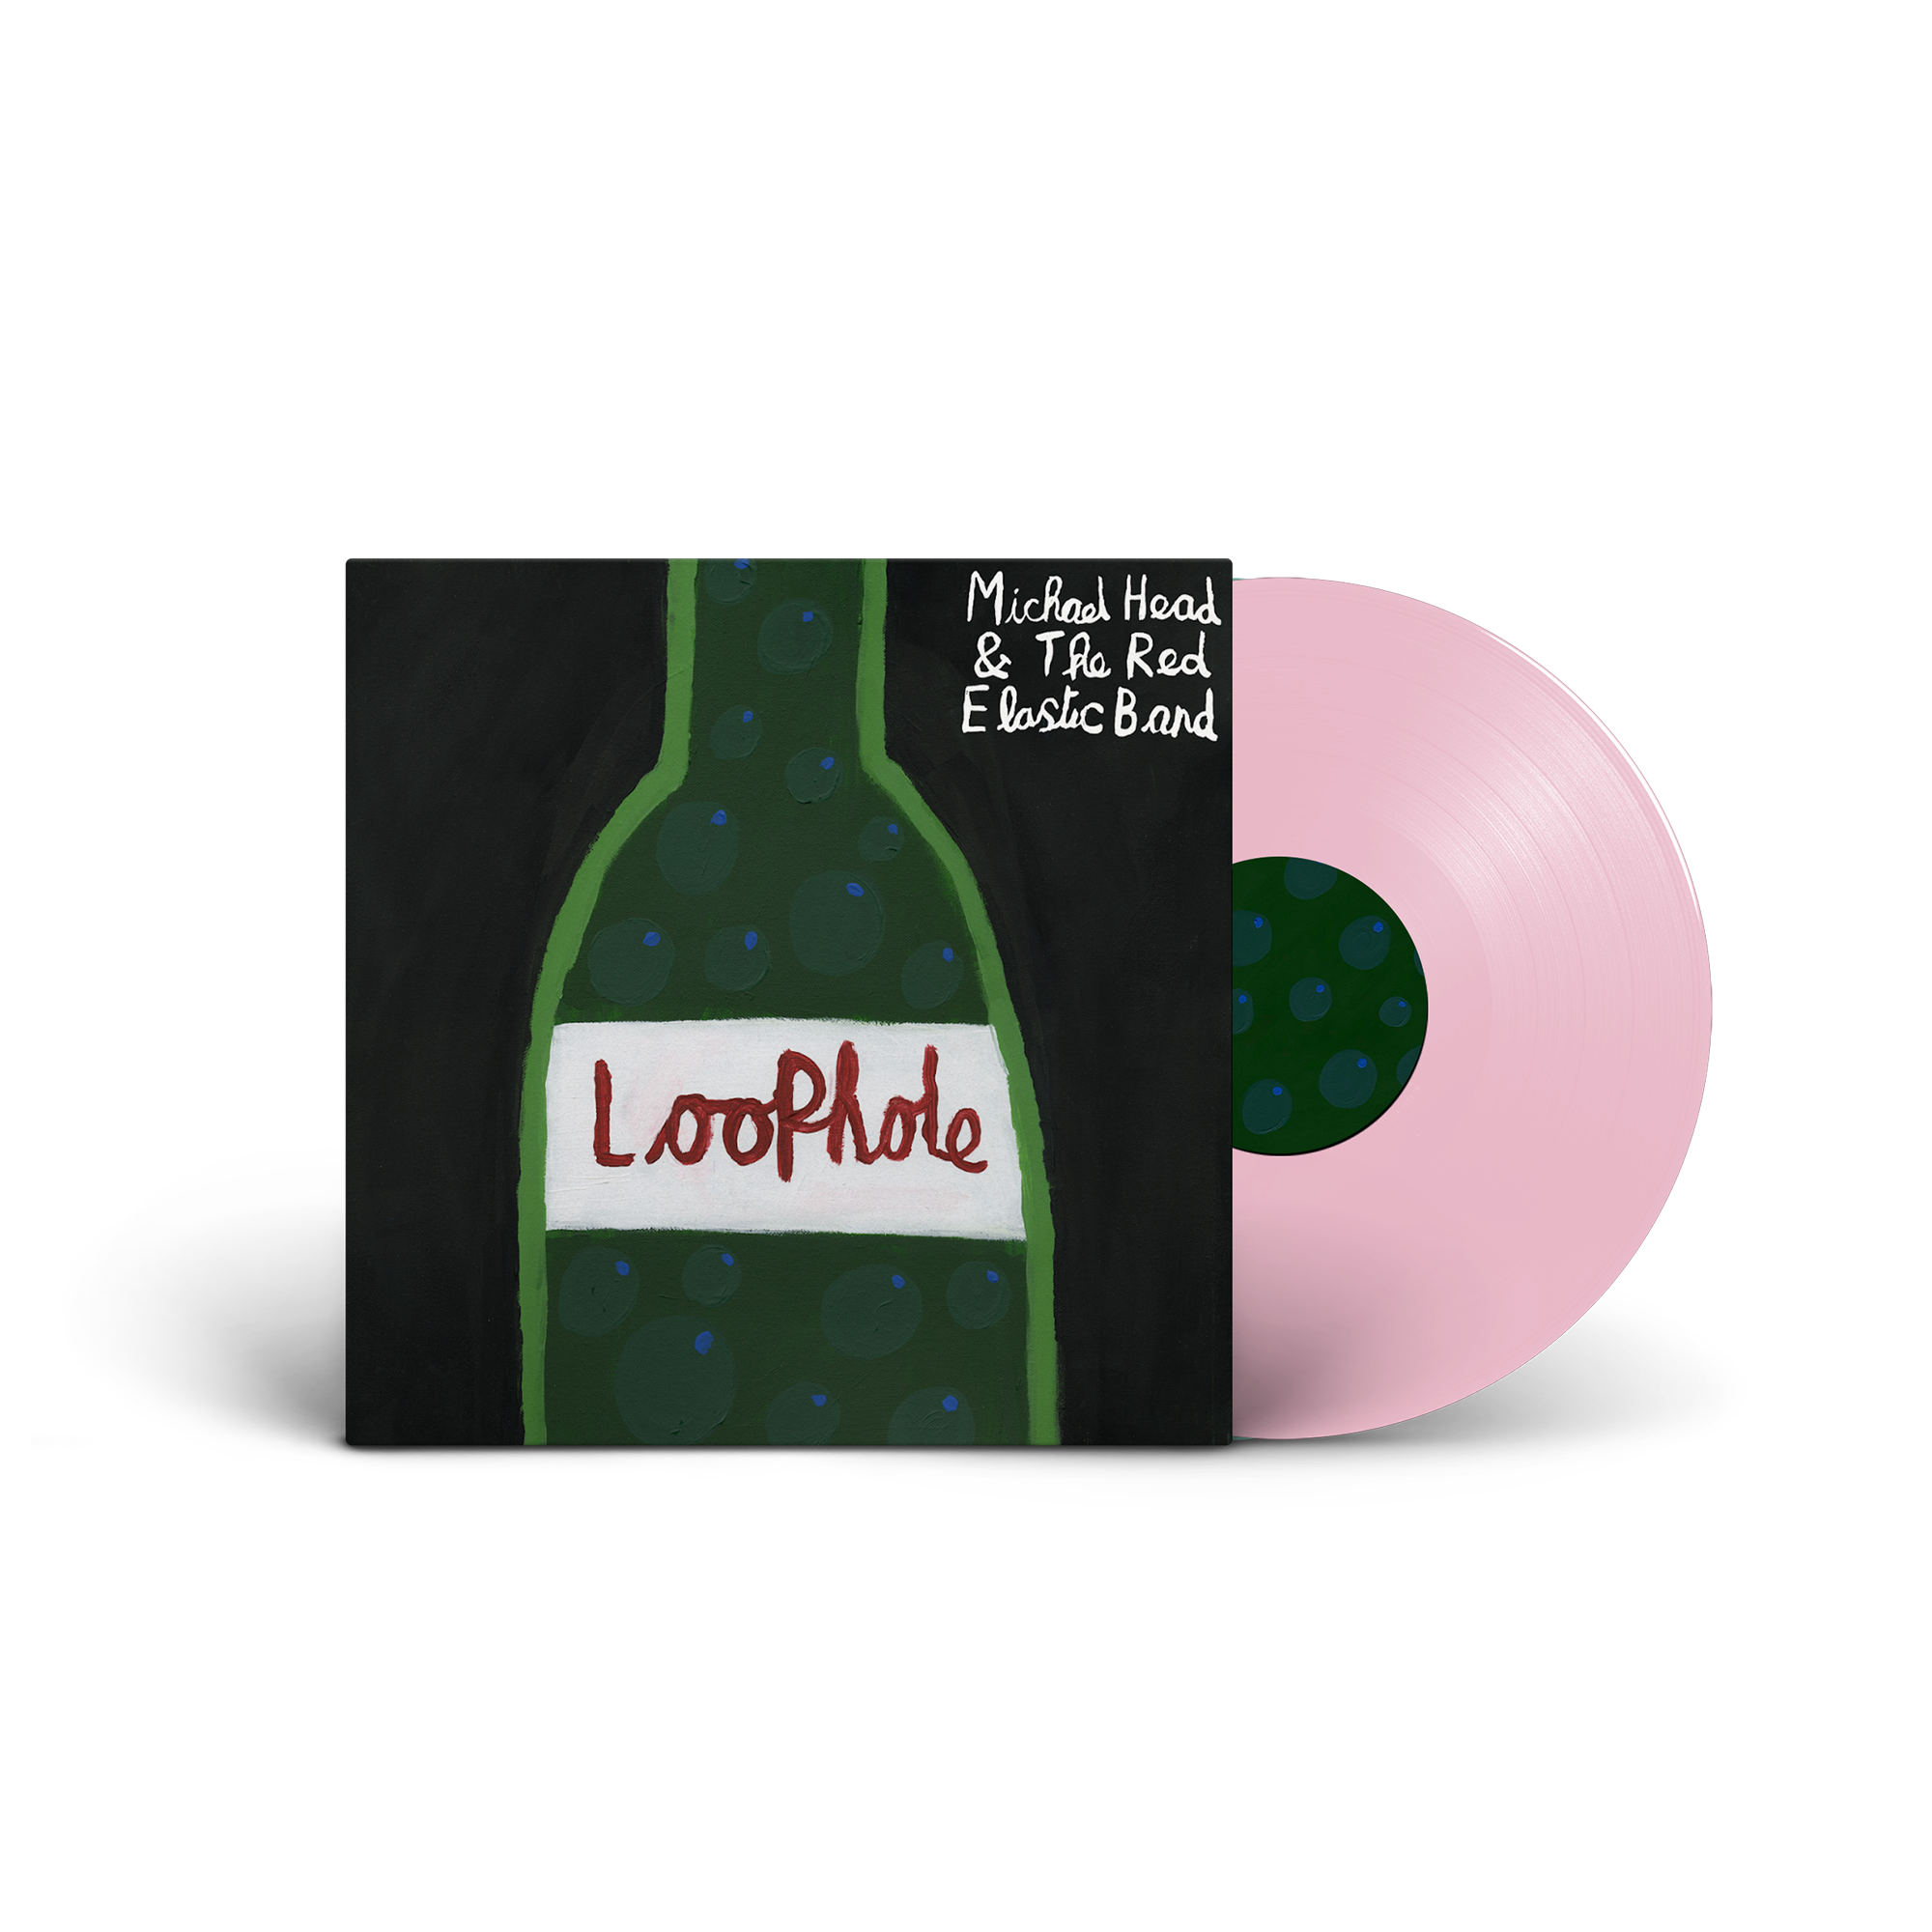 Michael Head & The Red Elastic Band - Loophole: Pink Vinyl LP